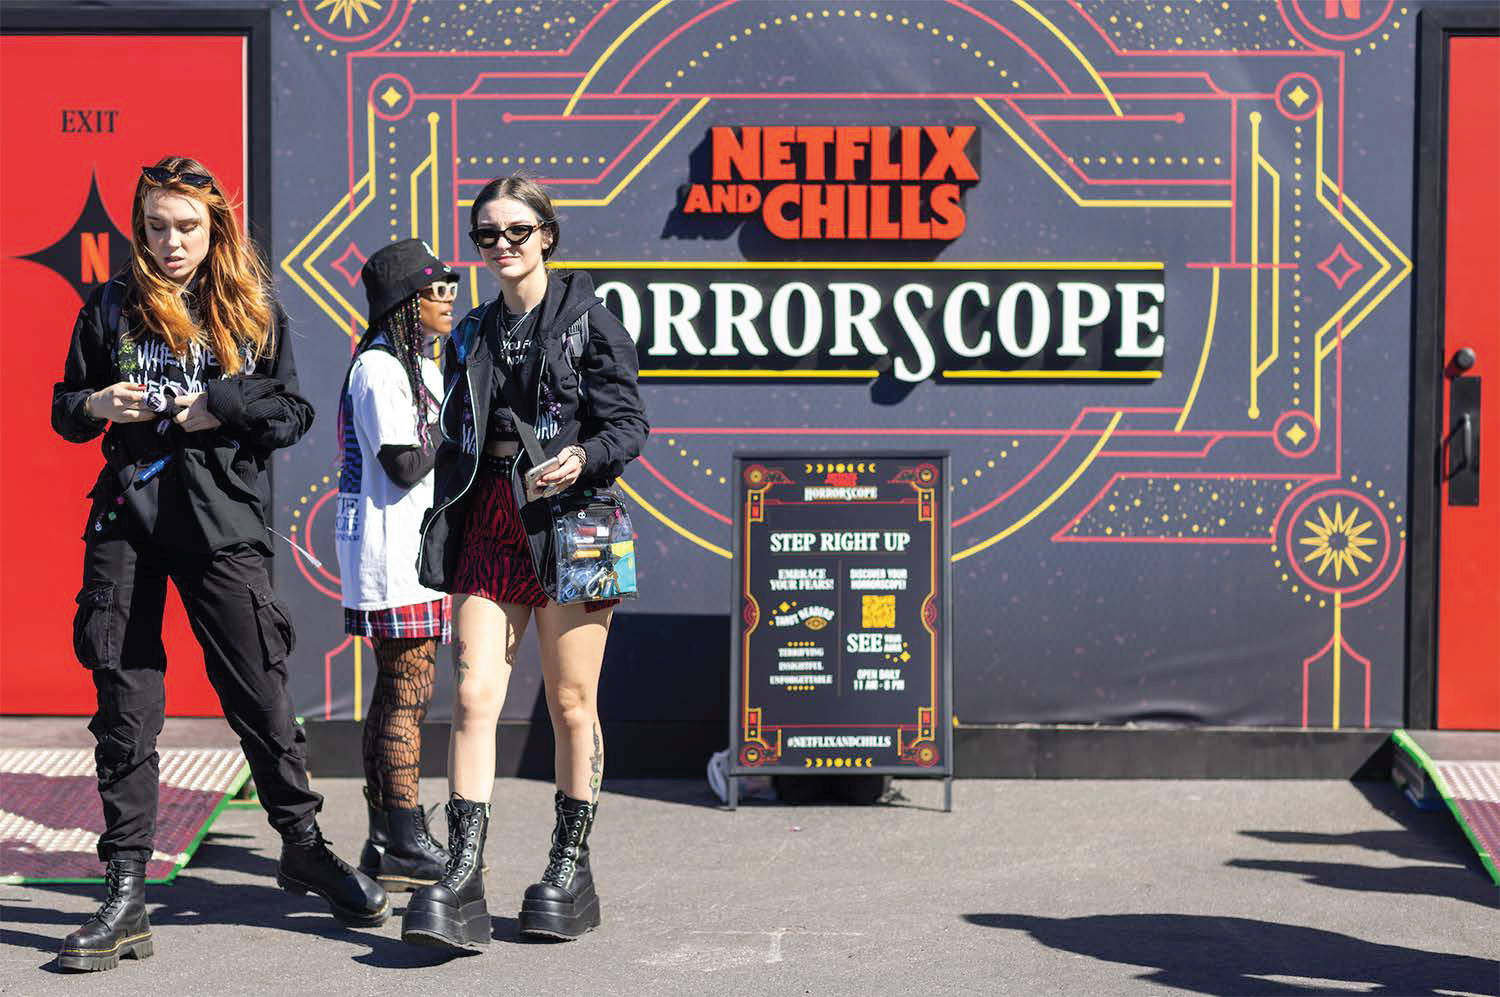 Netflix & Chills: Horrorscope